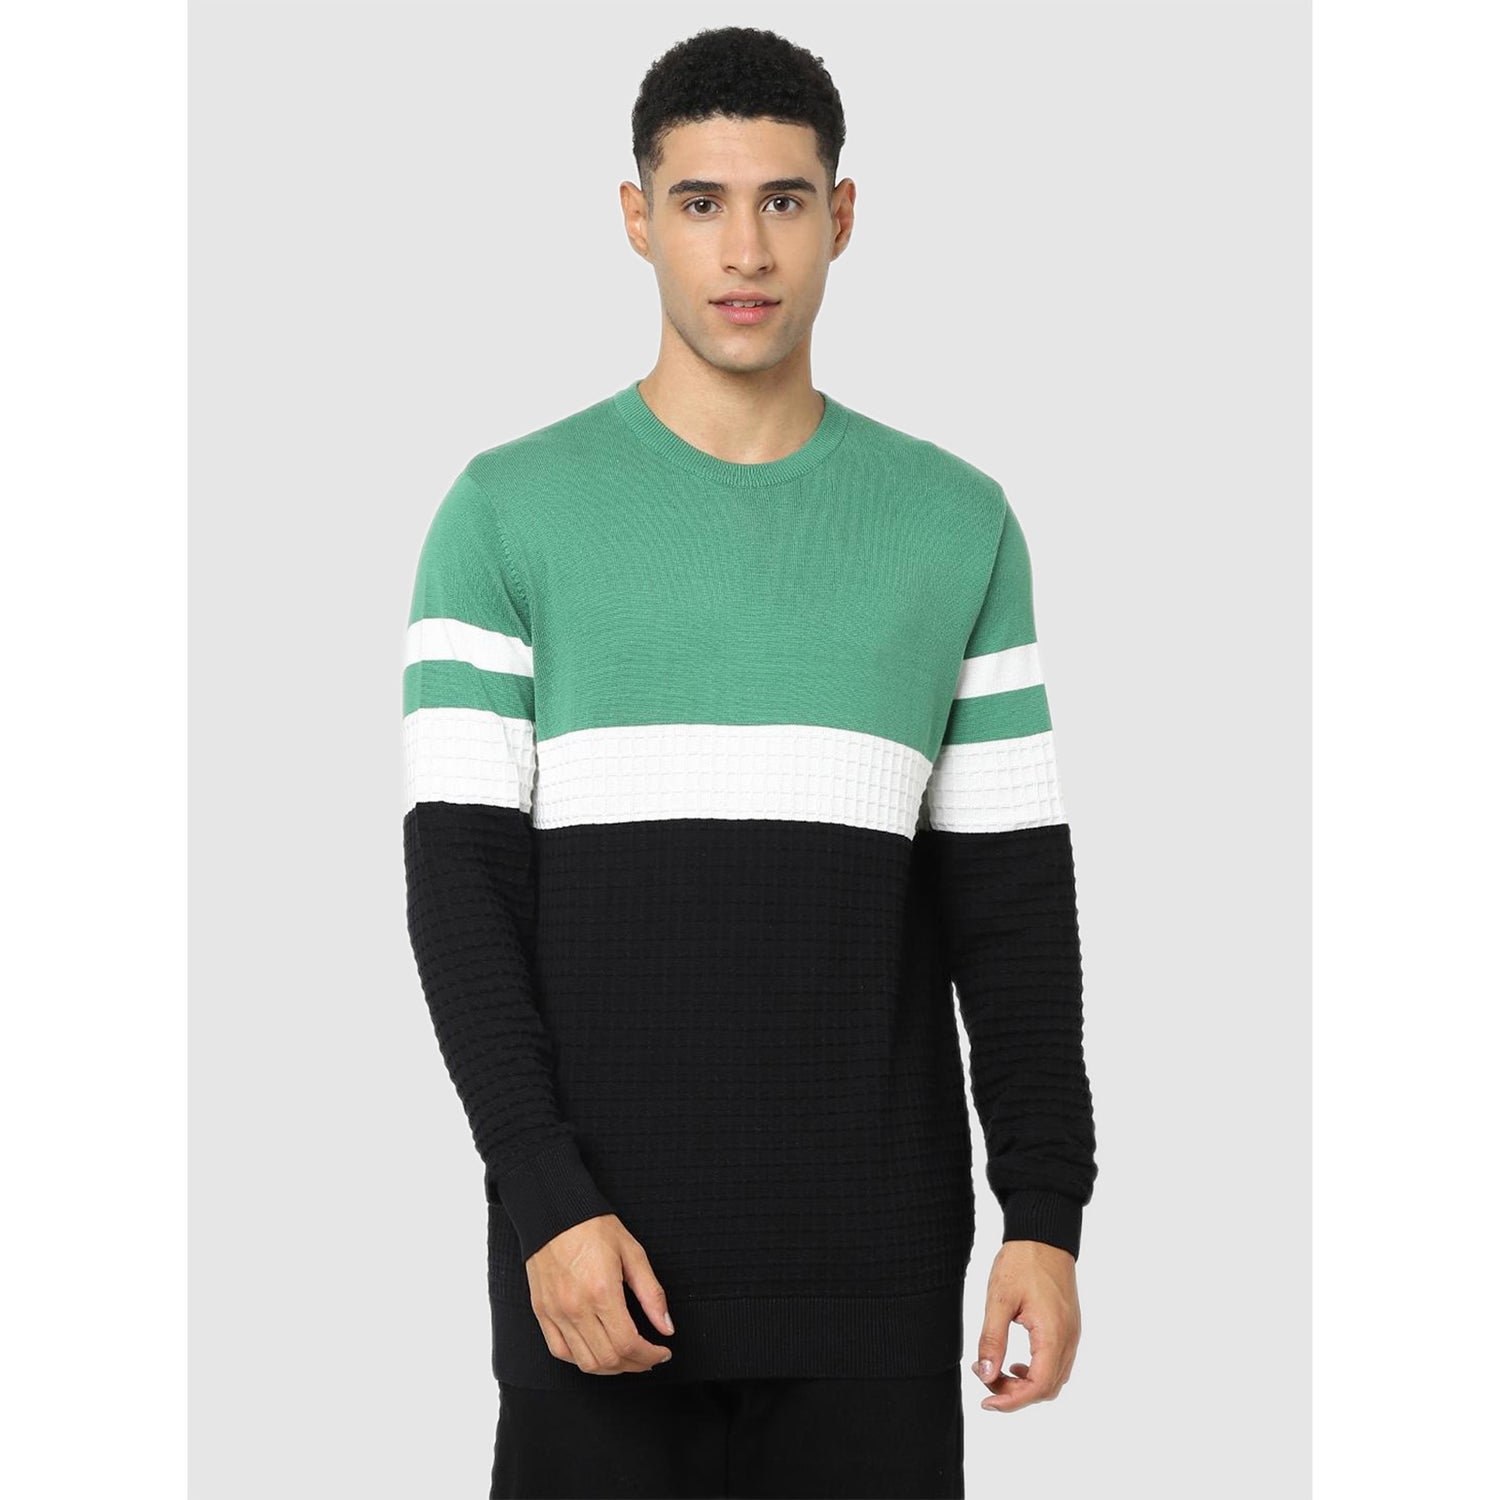 Black and White Colourblocked Pullover Sweater (CEBOX)